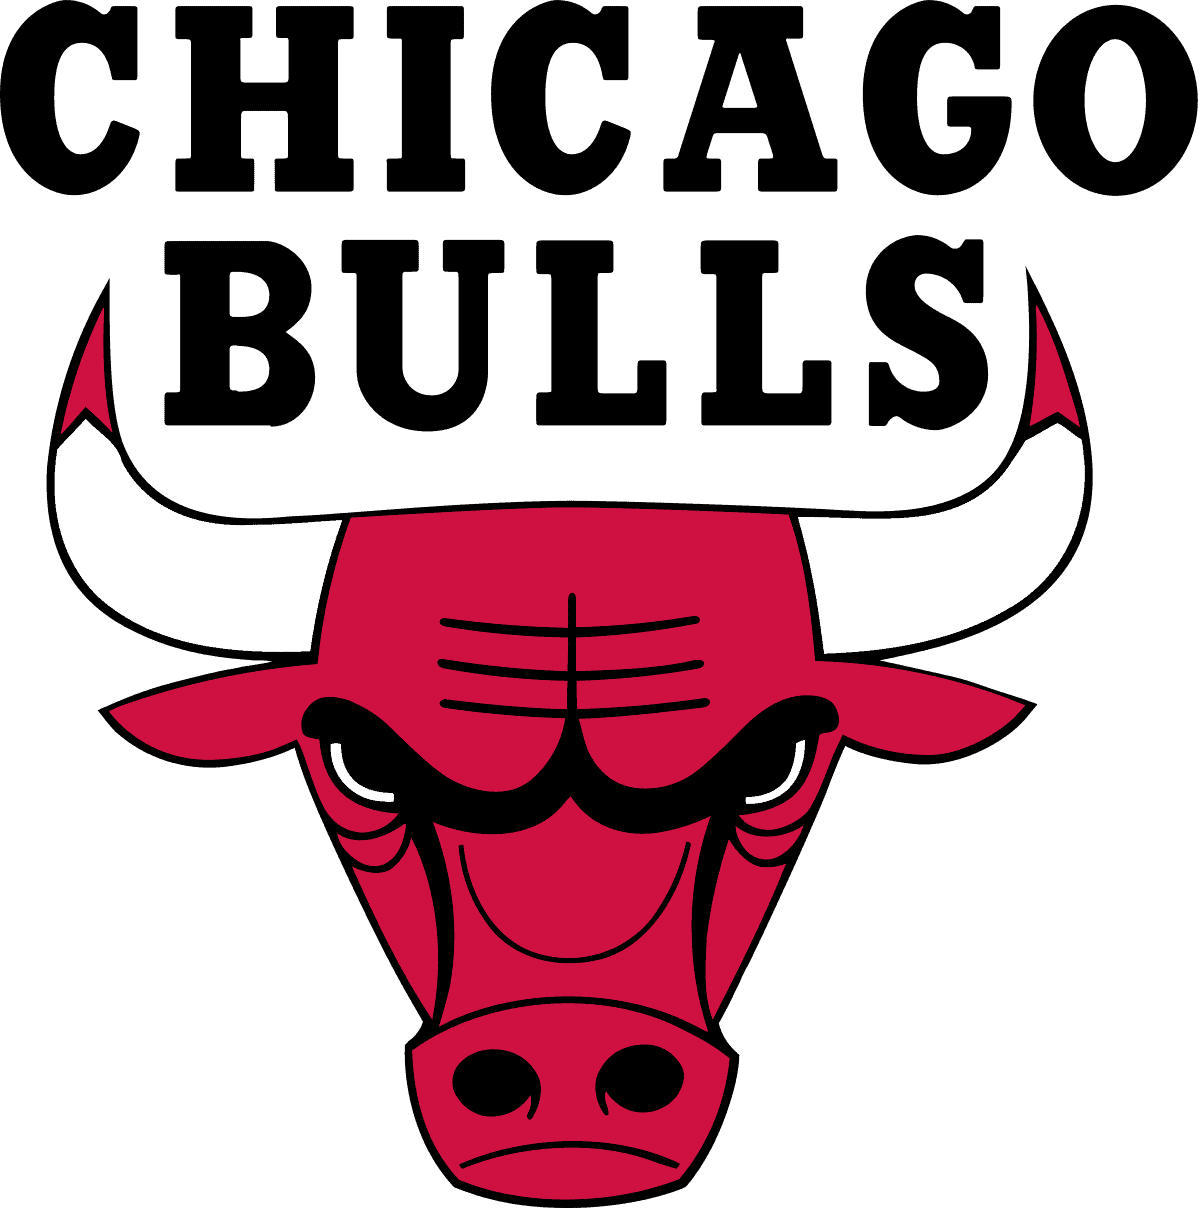 Chicago Bulls: Team Updates, Players, History